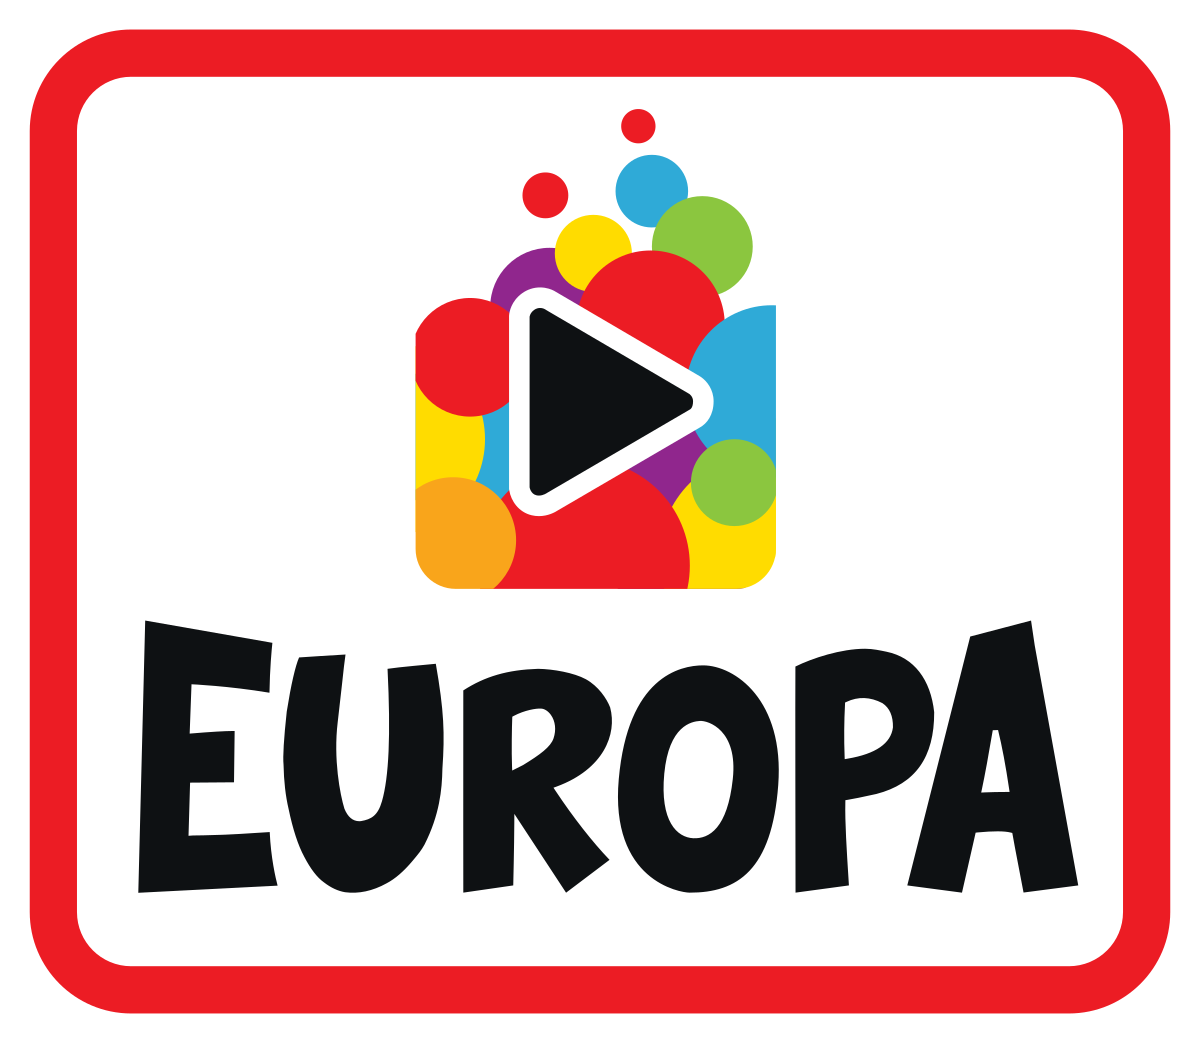 UEFA Europa League unveils new, 'edgier' brand identity | Media Marketing